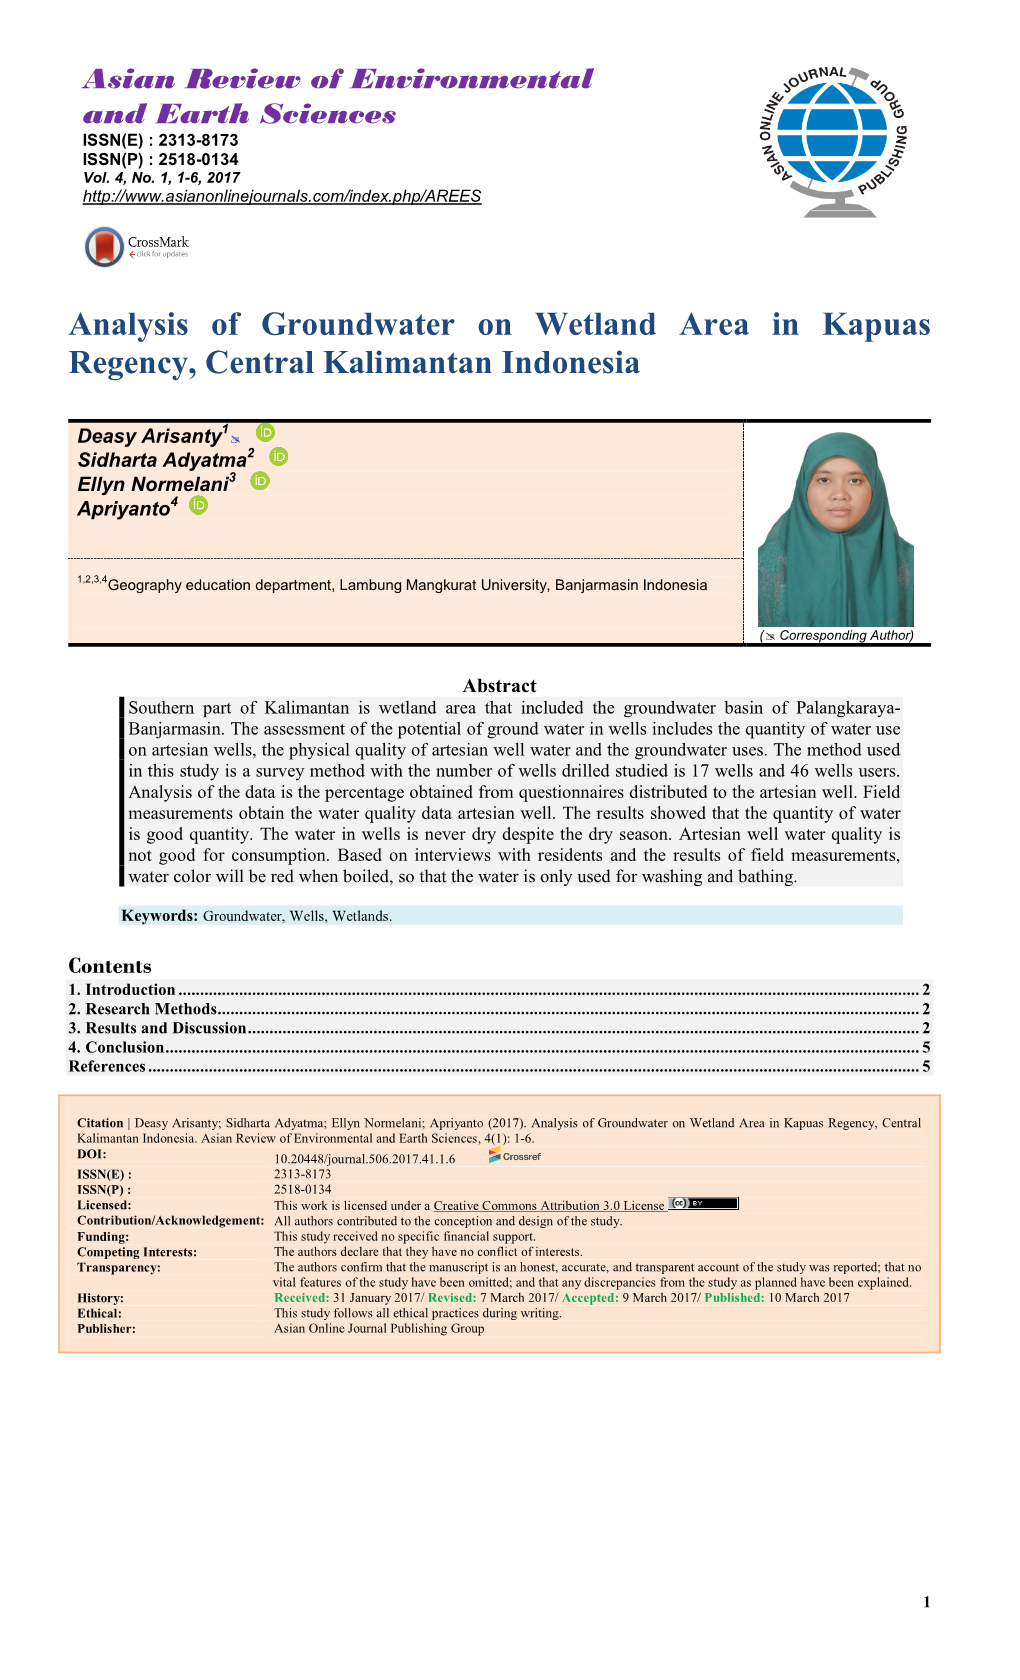 Analysis of Groundwater on Wetland Area in Kapuas Regency, Central Kalimantan Indonesia